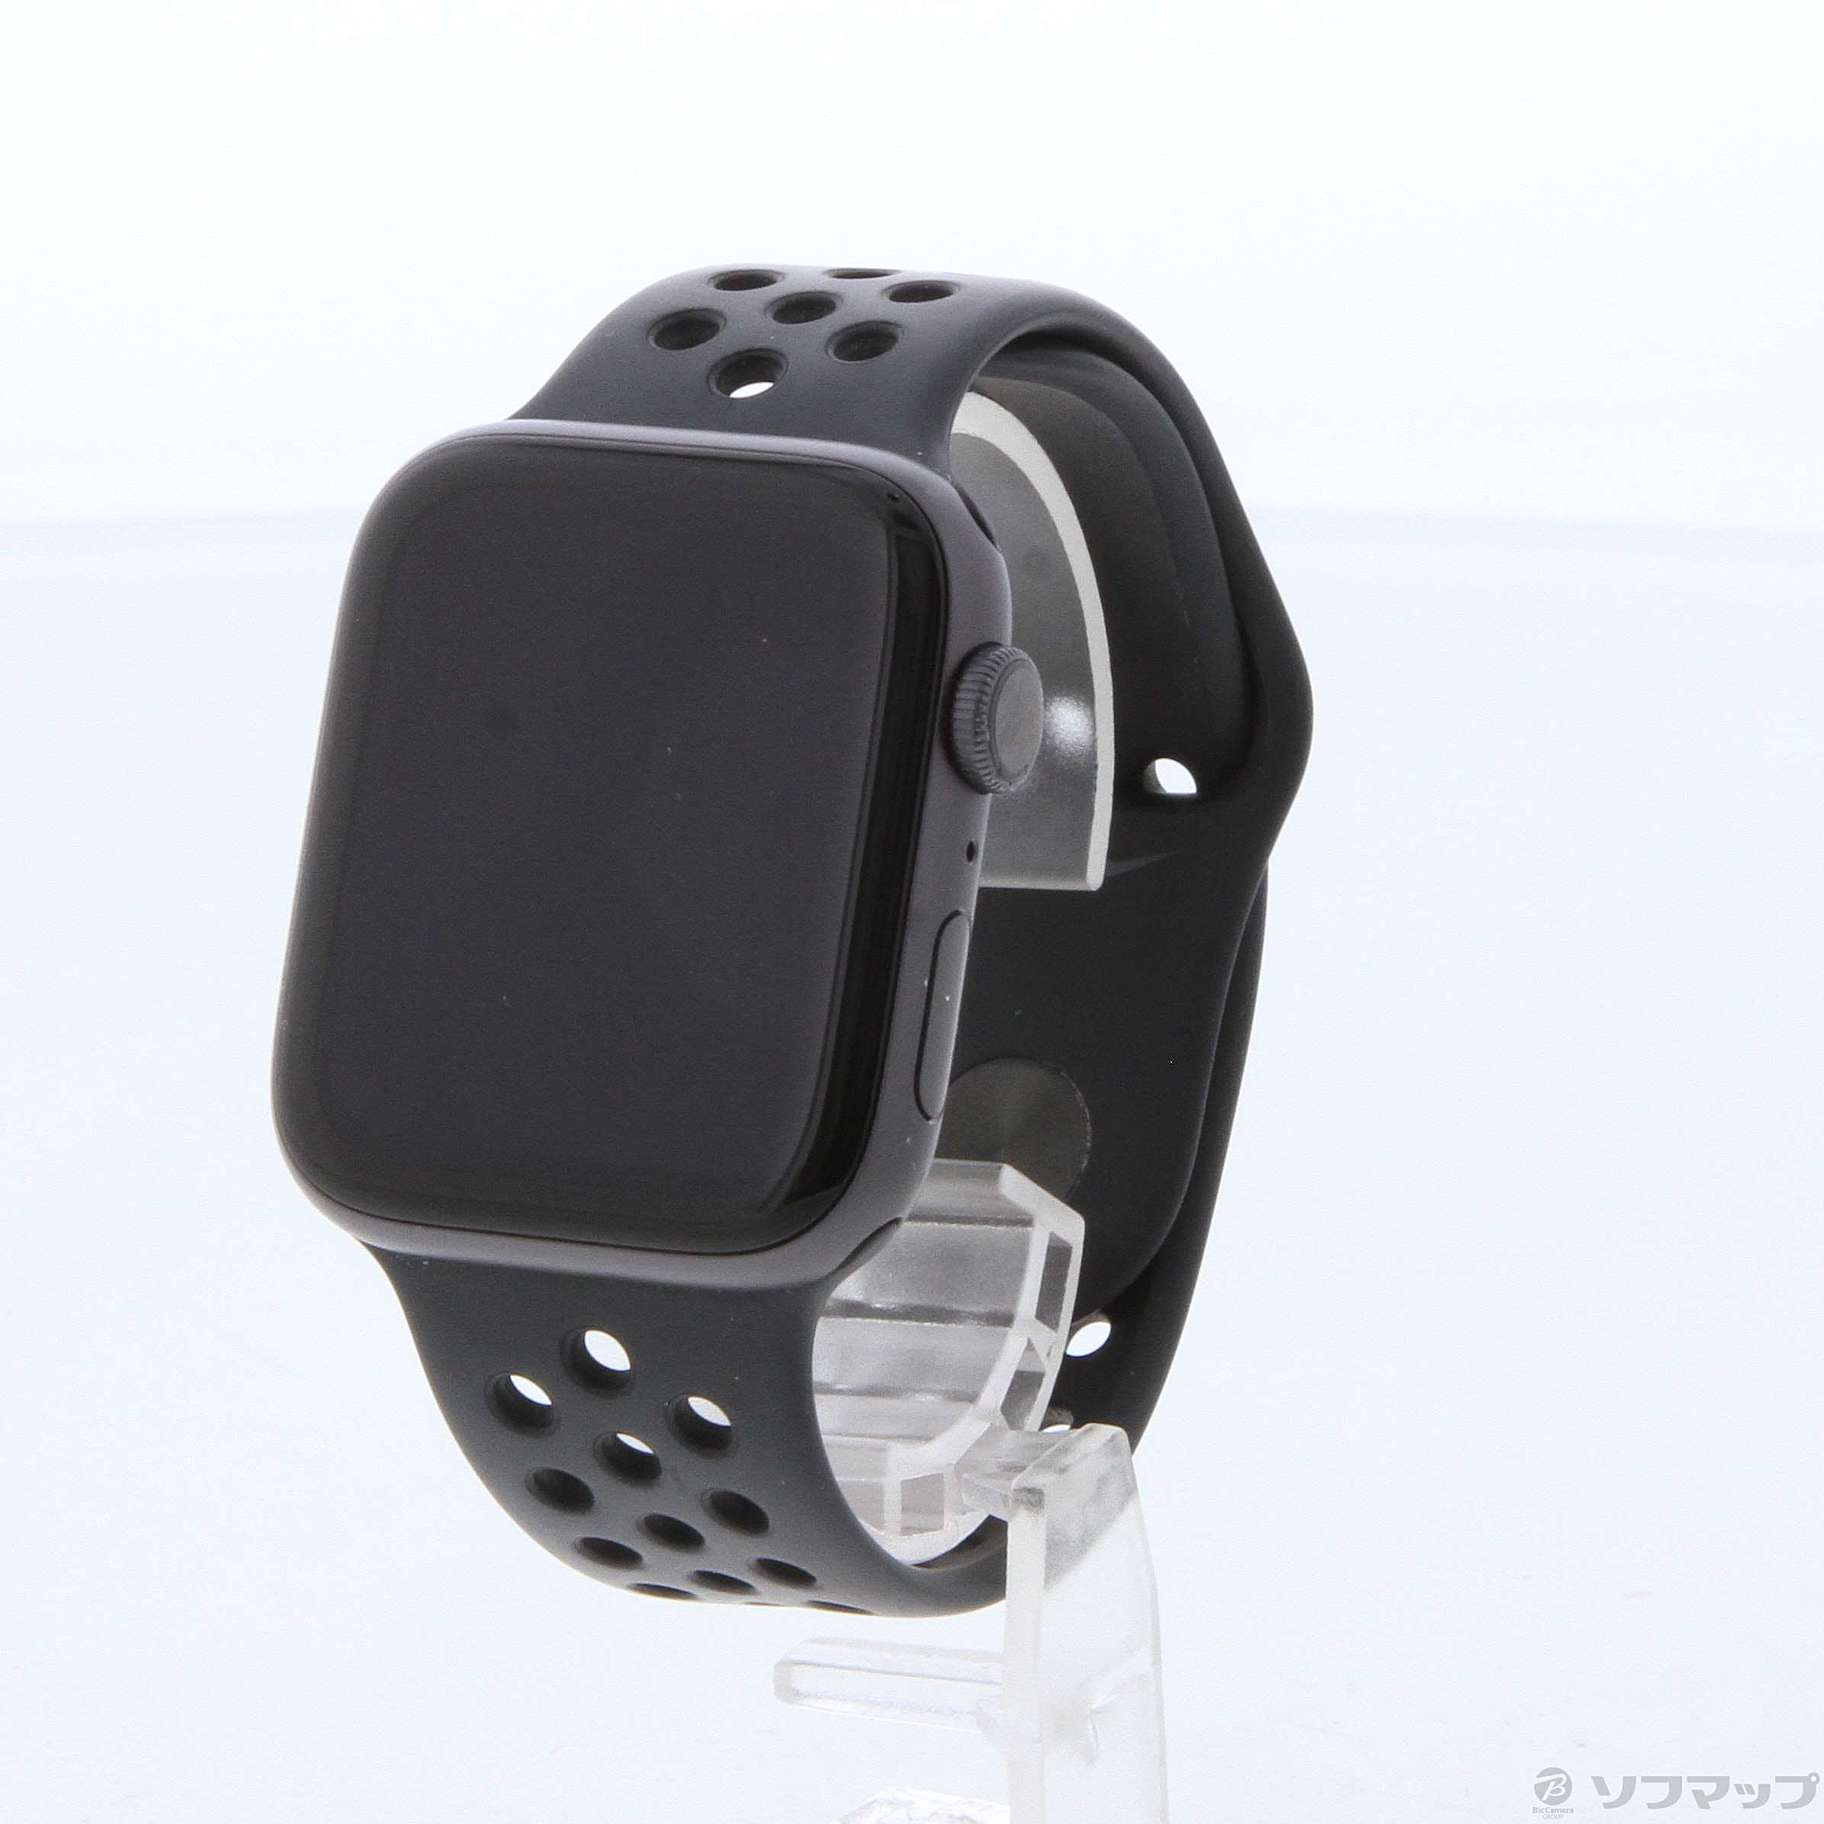 Apple Watch Nike Series6 44mm space Gray